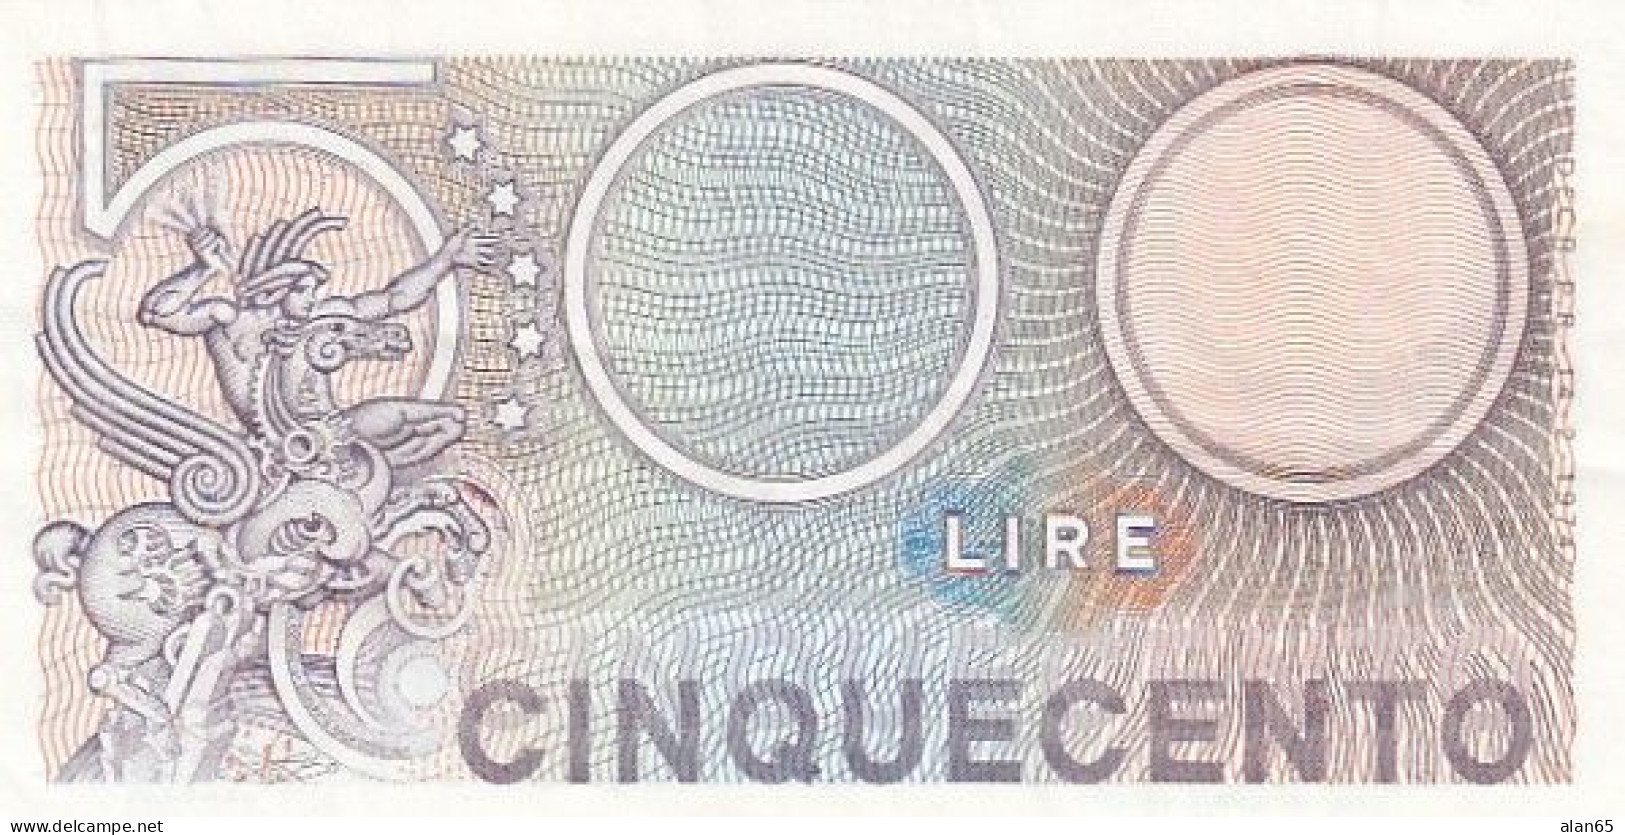 Italy #94, 500 Lire 1974 Banknote - 500 Liras